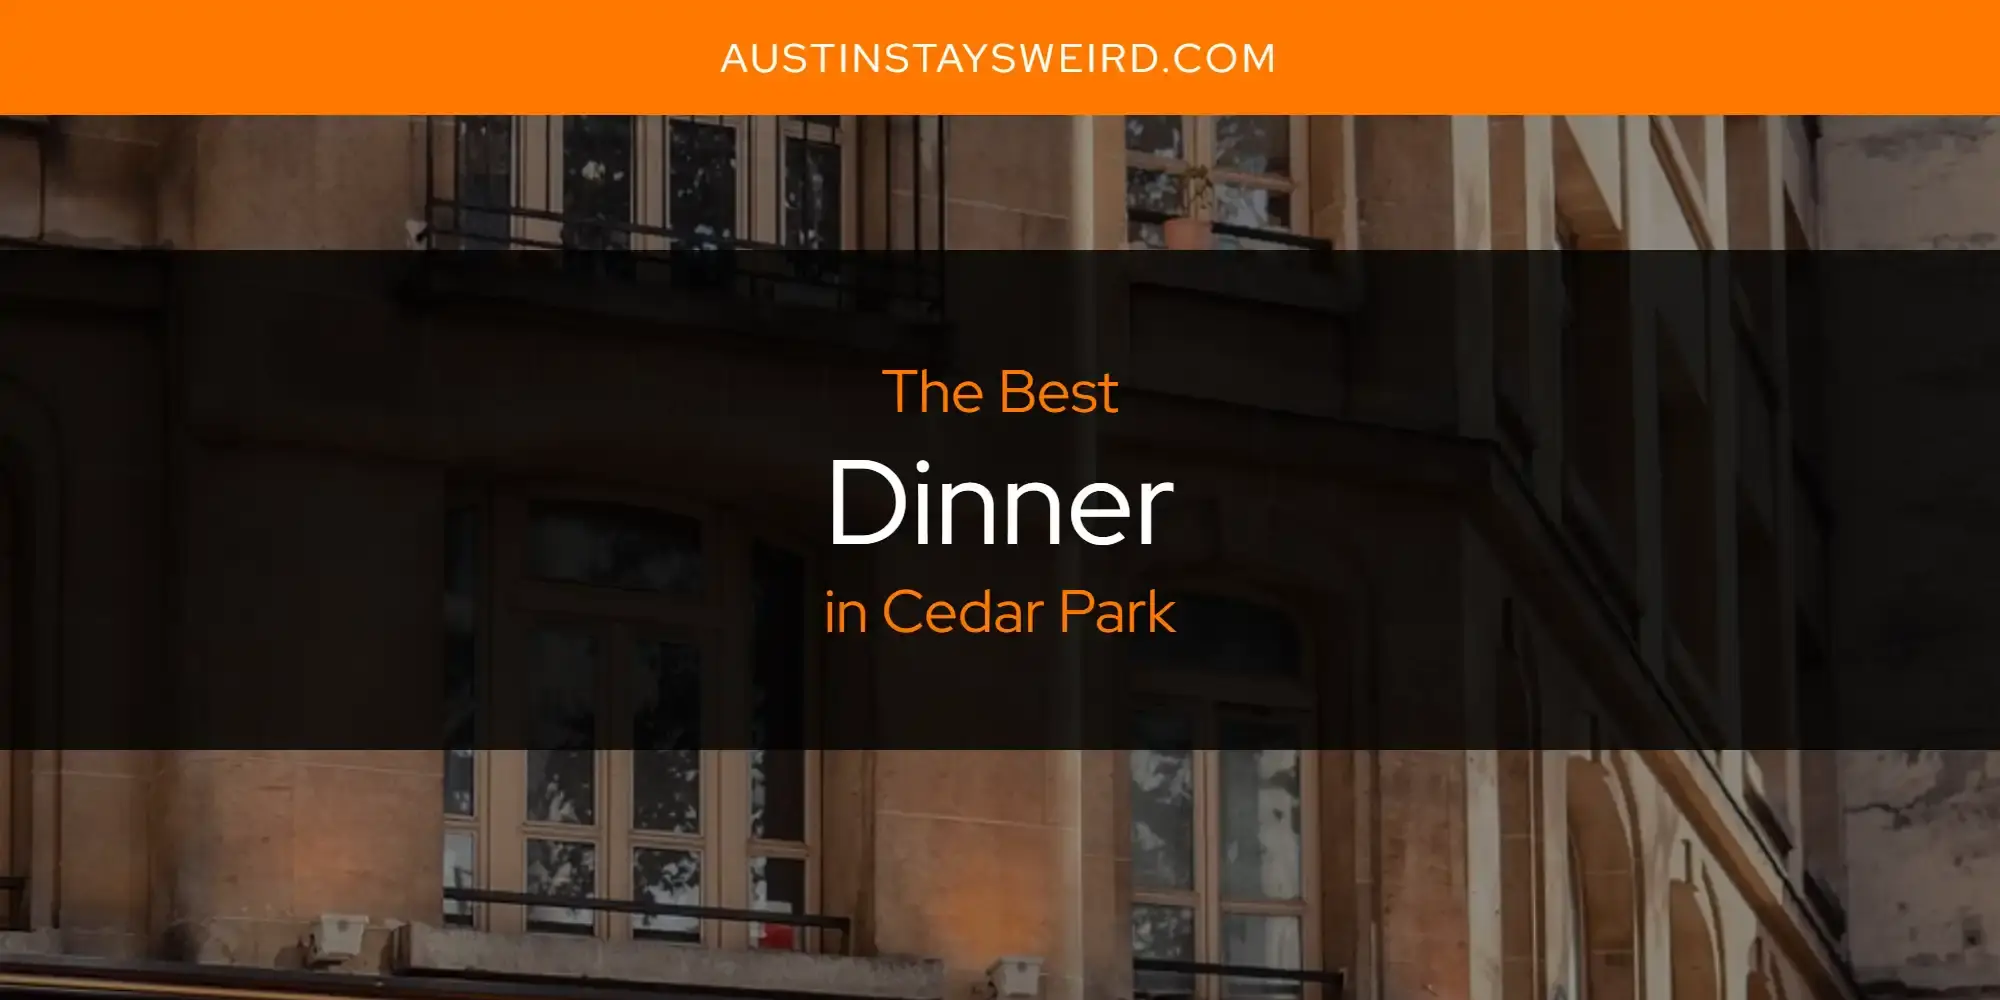 Best Dinner in Cedar Park? Here's the Top 8